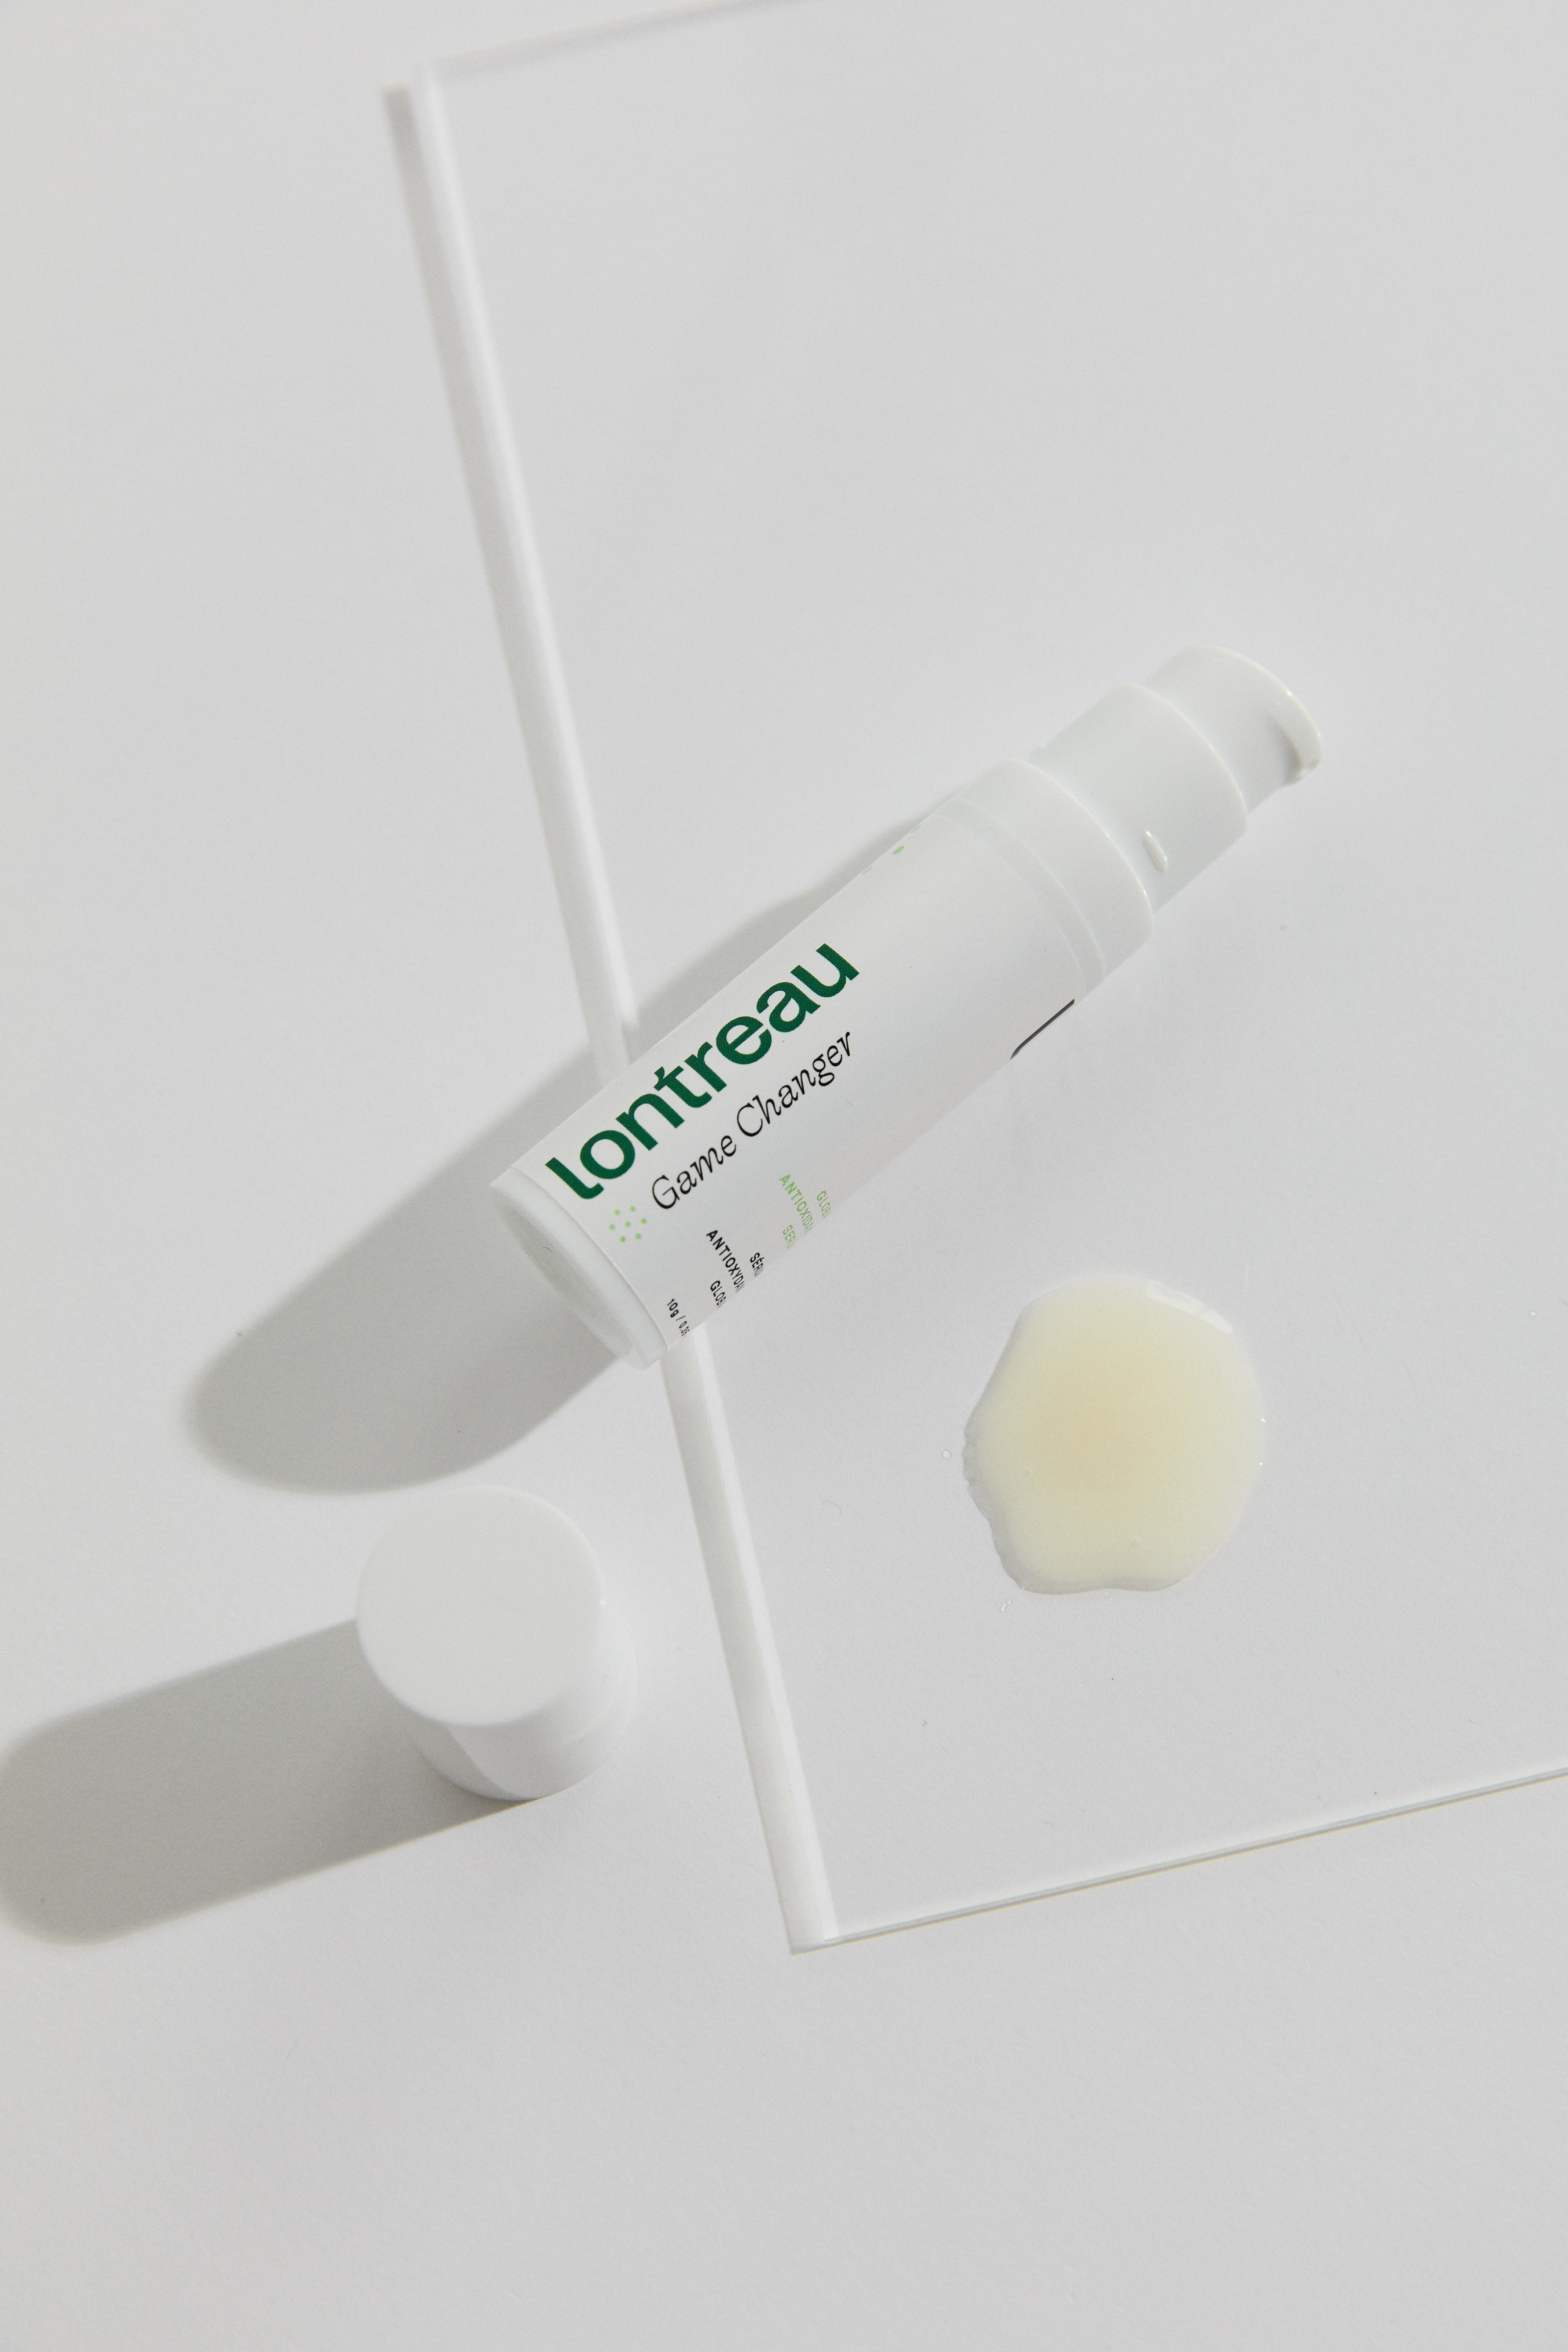 Lontreau Game Changer Global Antioxidant Serum